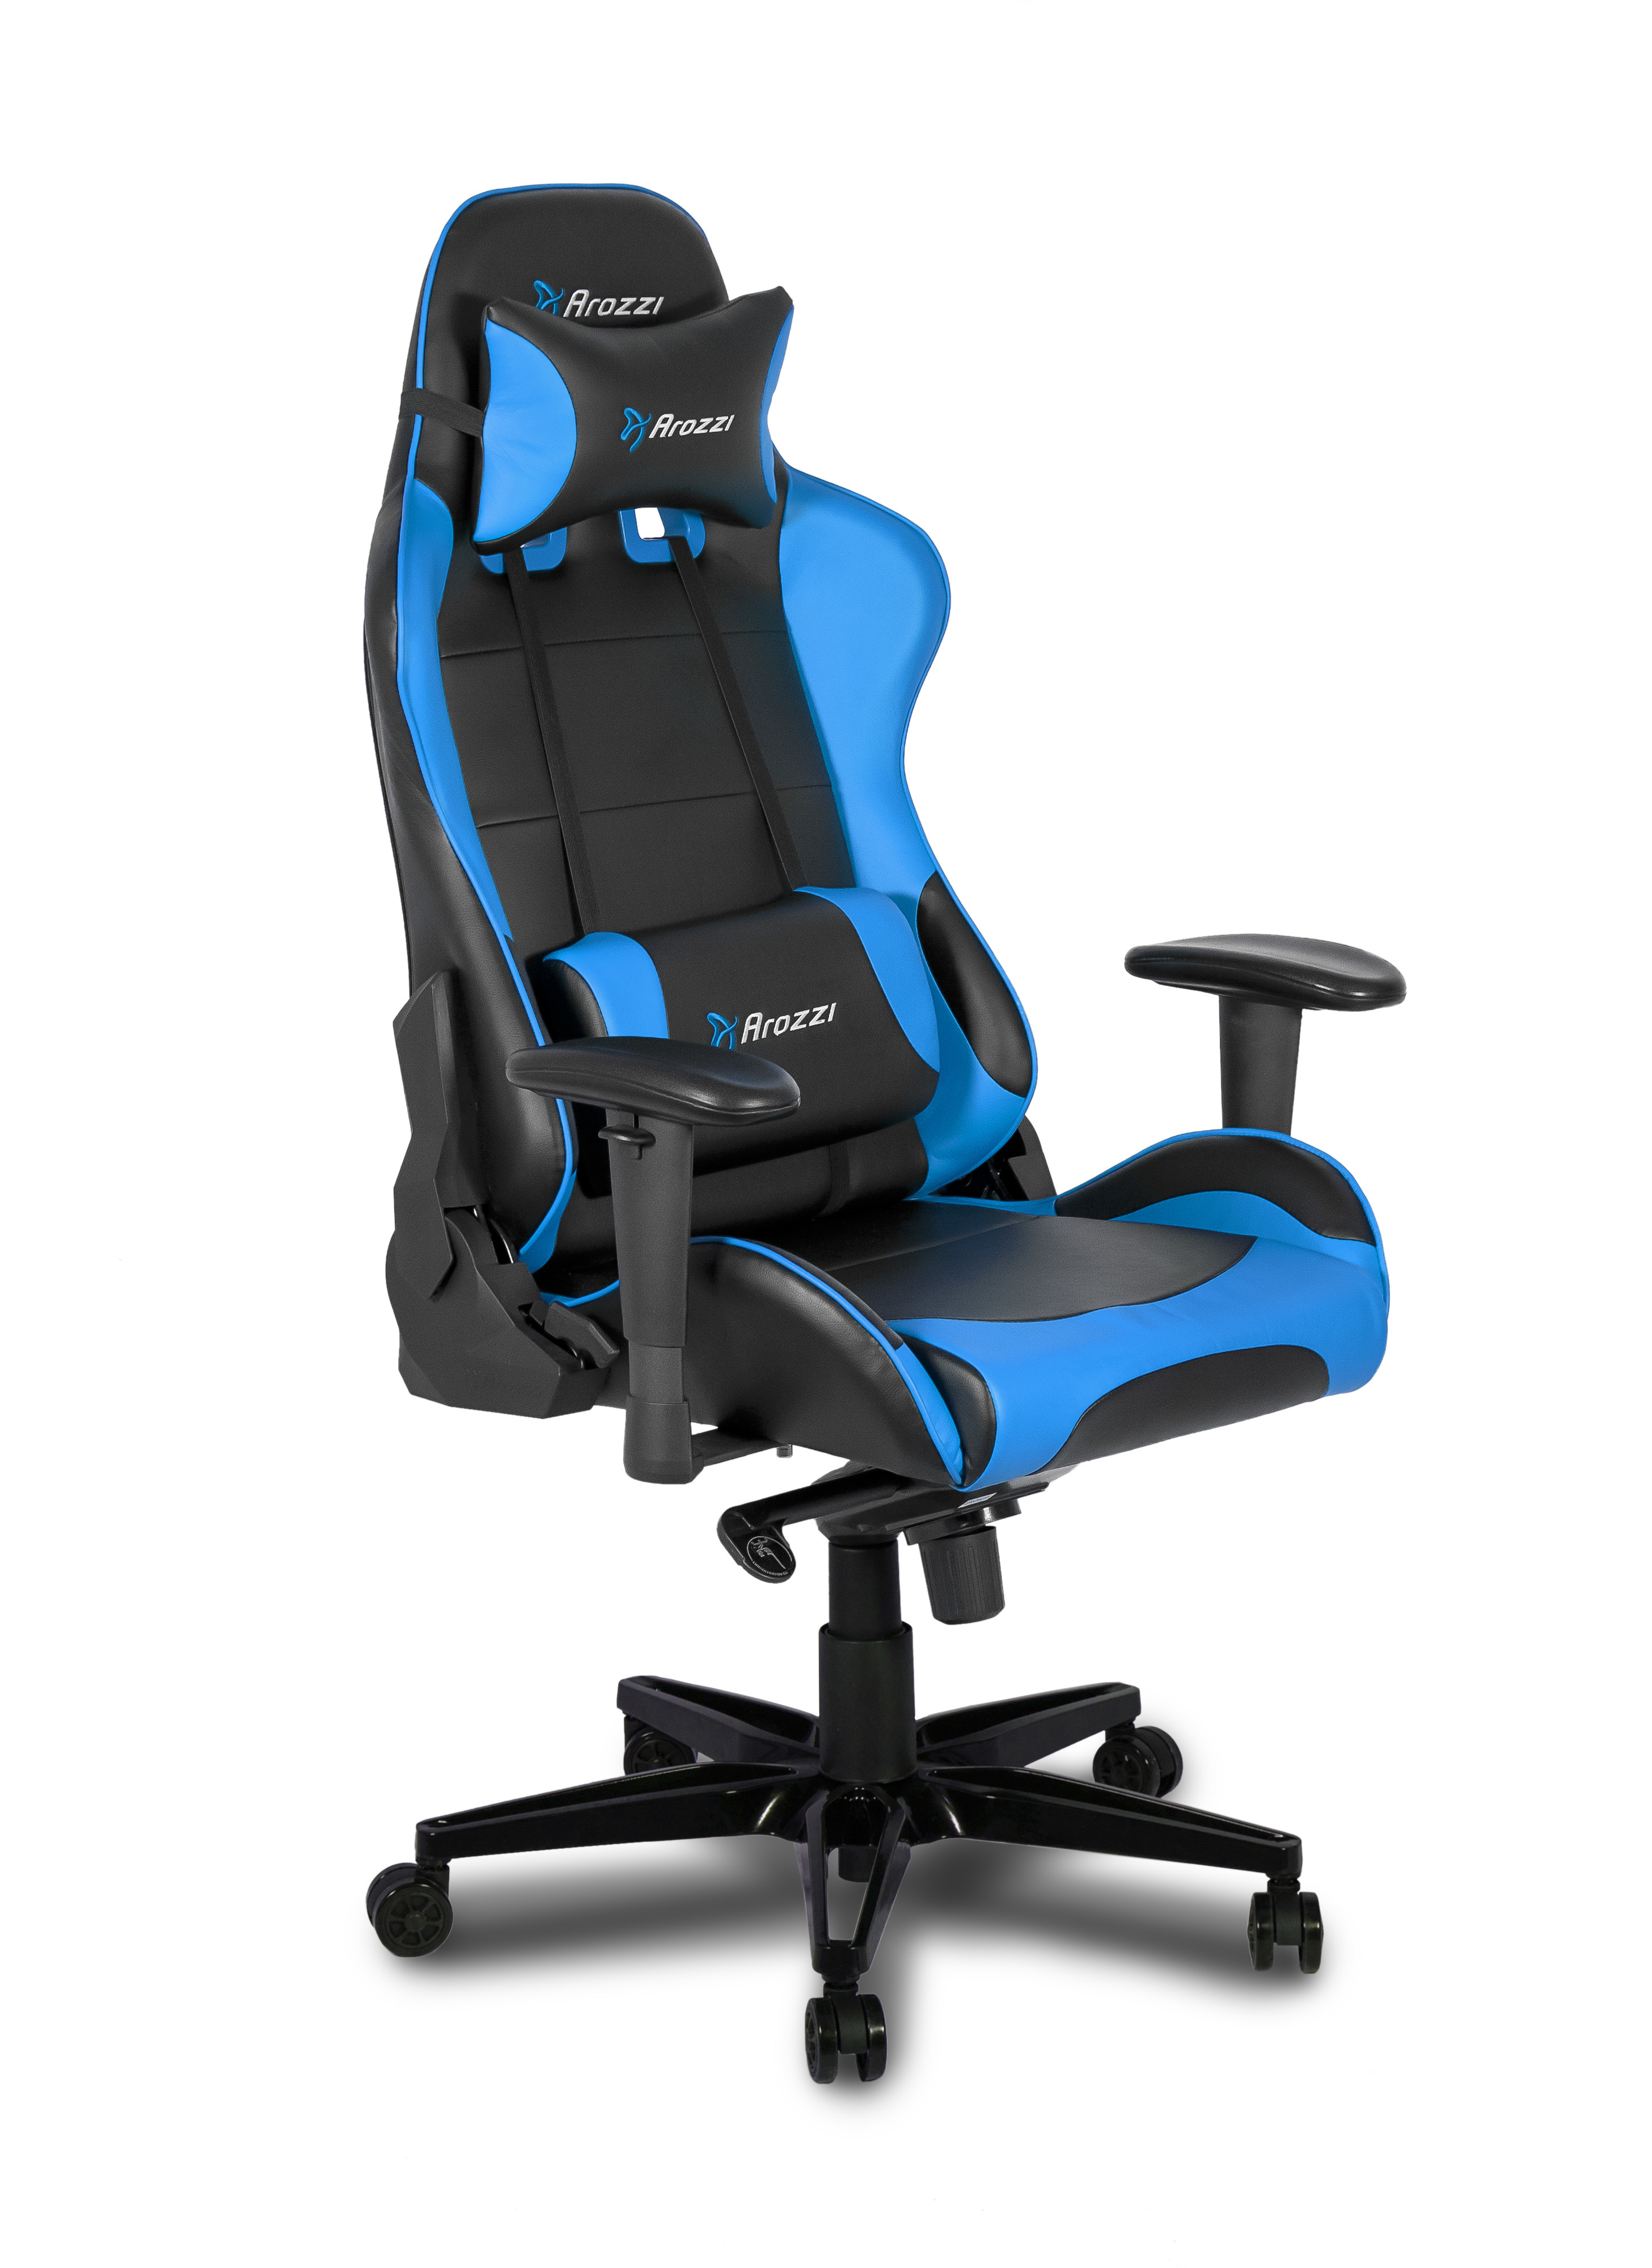 Arozzi Verona XL+ modrá, herní židle | AB-COM.cz